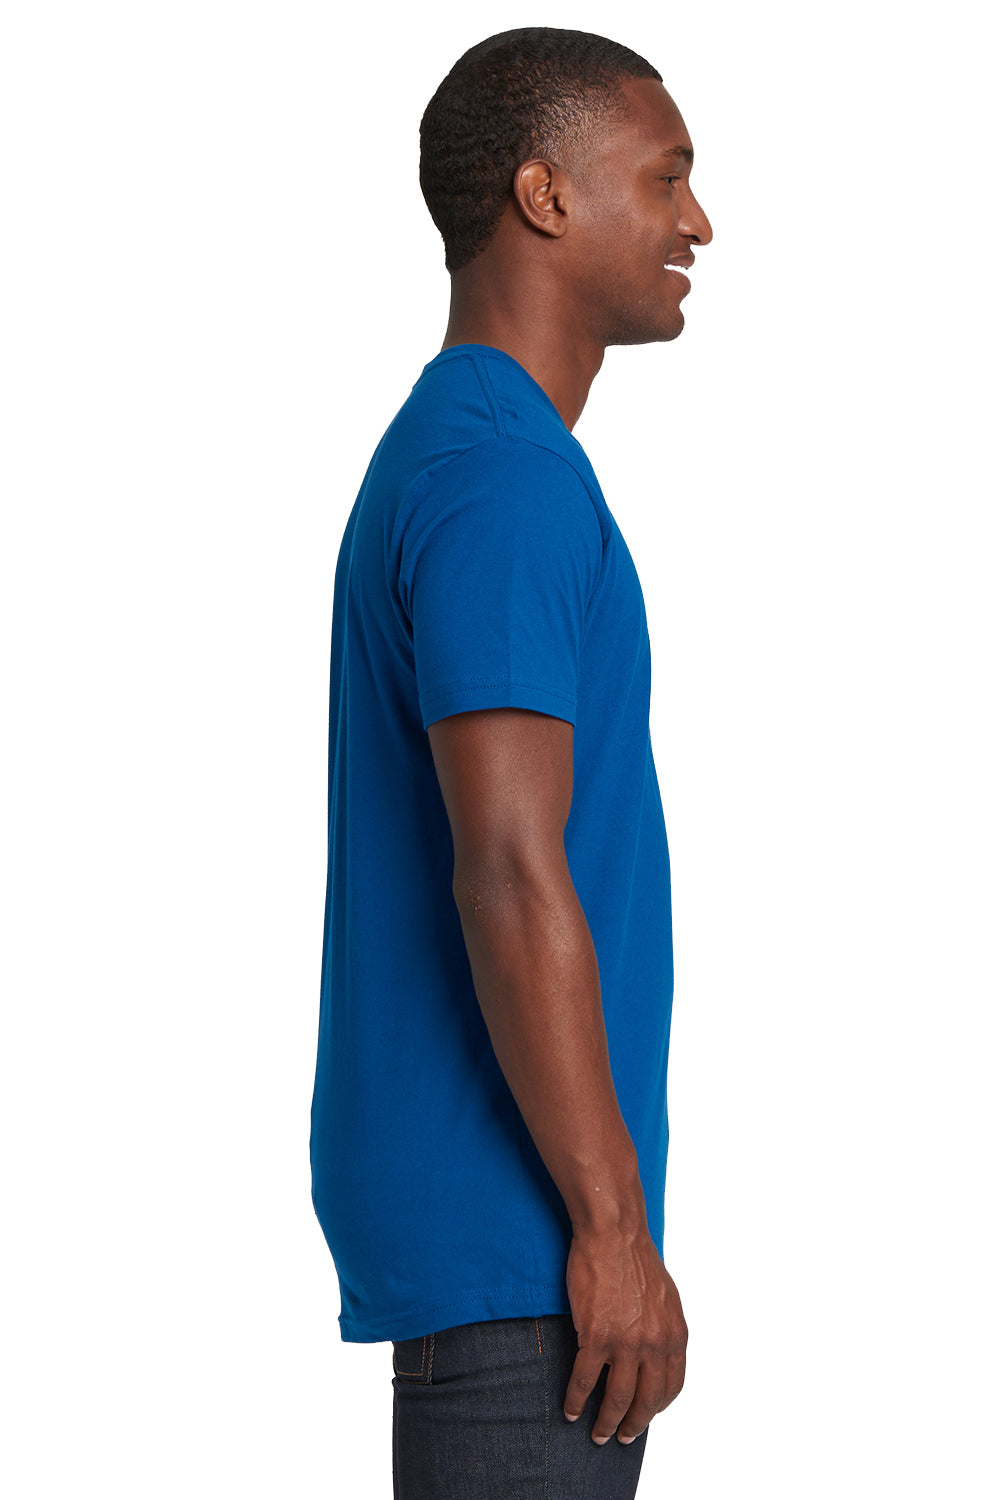 Next Level 3600 Mens Fine Jersey Short Sleeve Crewneck T-Shirt Cool Blue Side